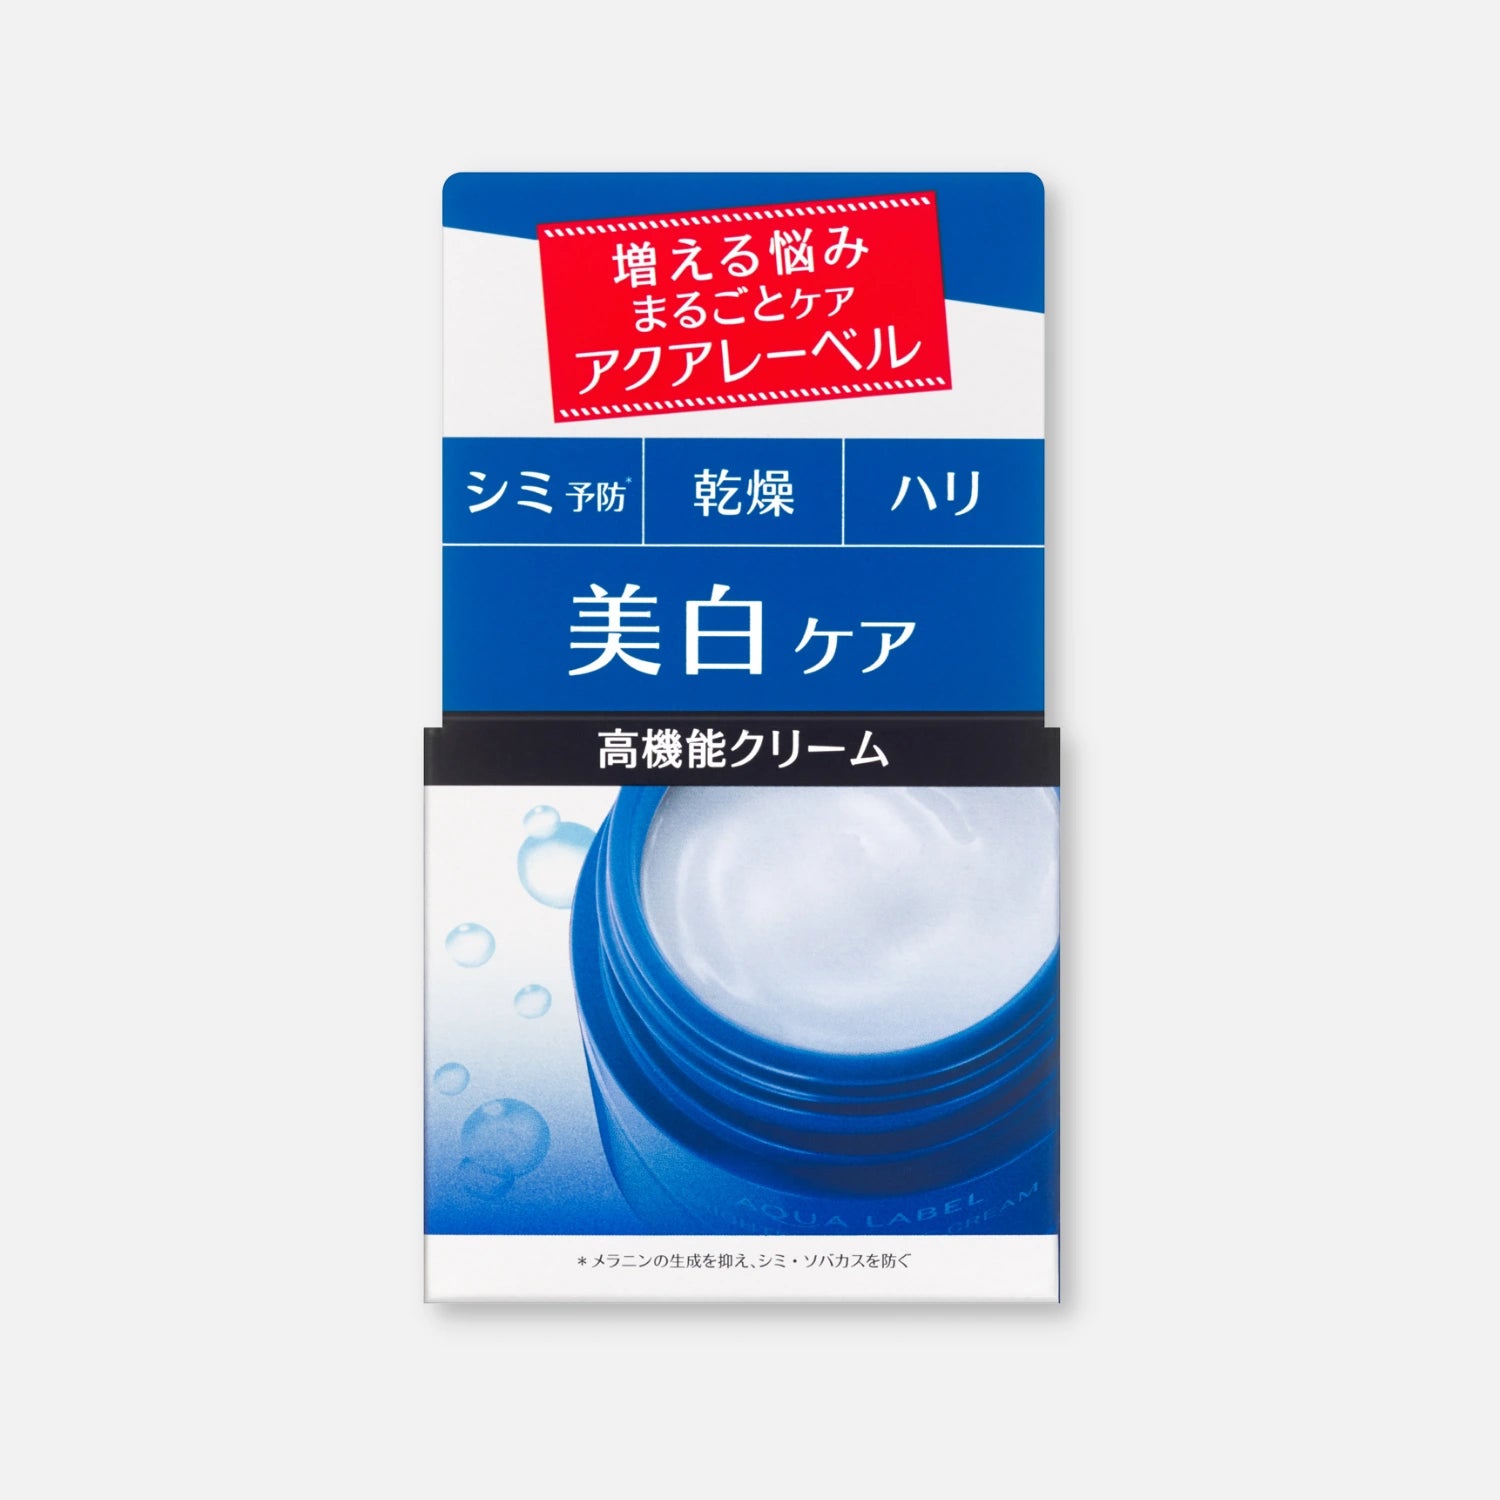 Shiseido AQUALABEL White Care Cream 50g - Buy Me Japan